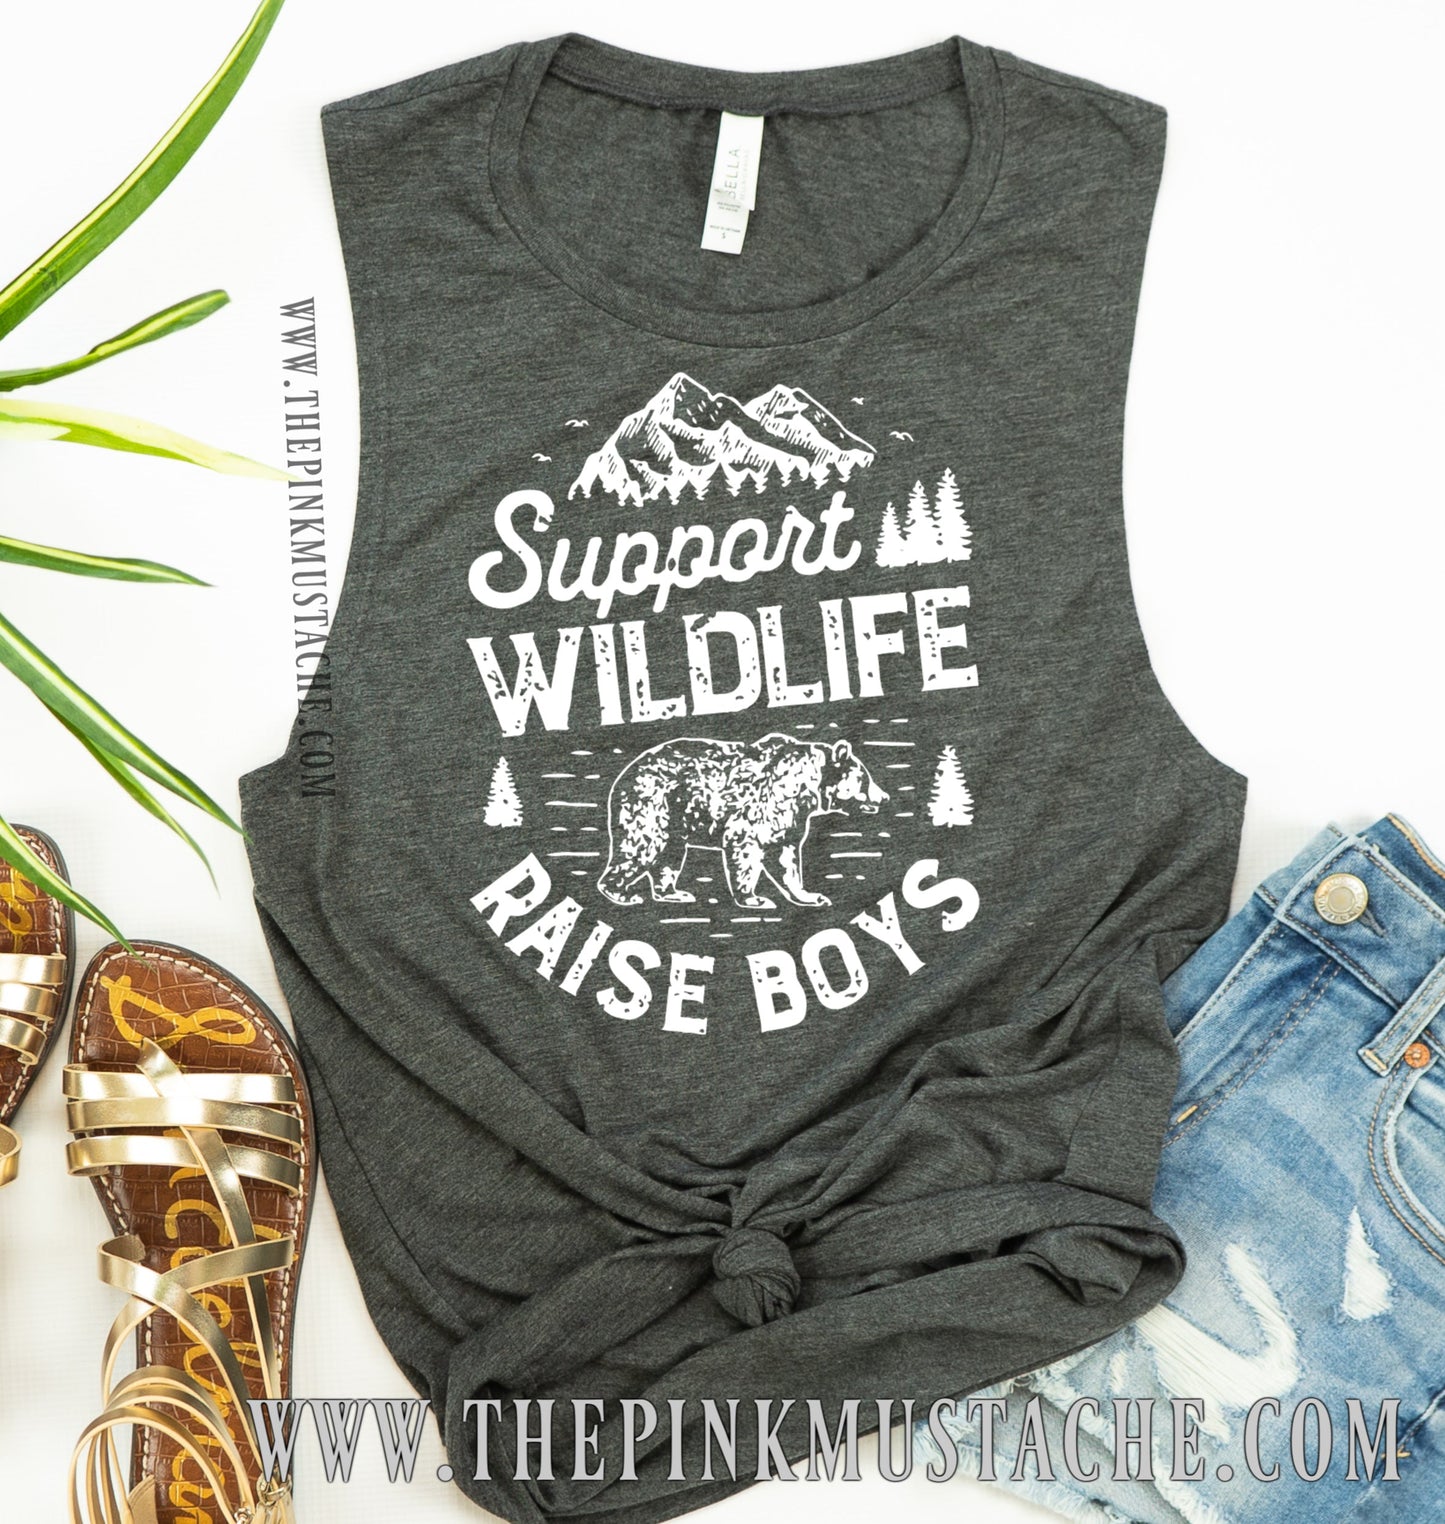 Support Wildlife Raise Boys Tank / Mother's Day Tank